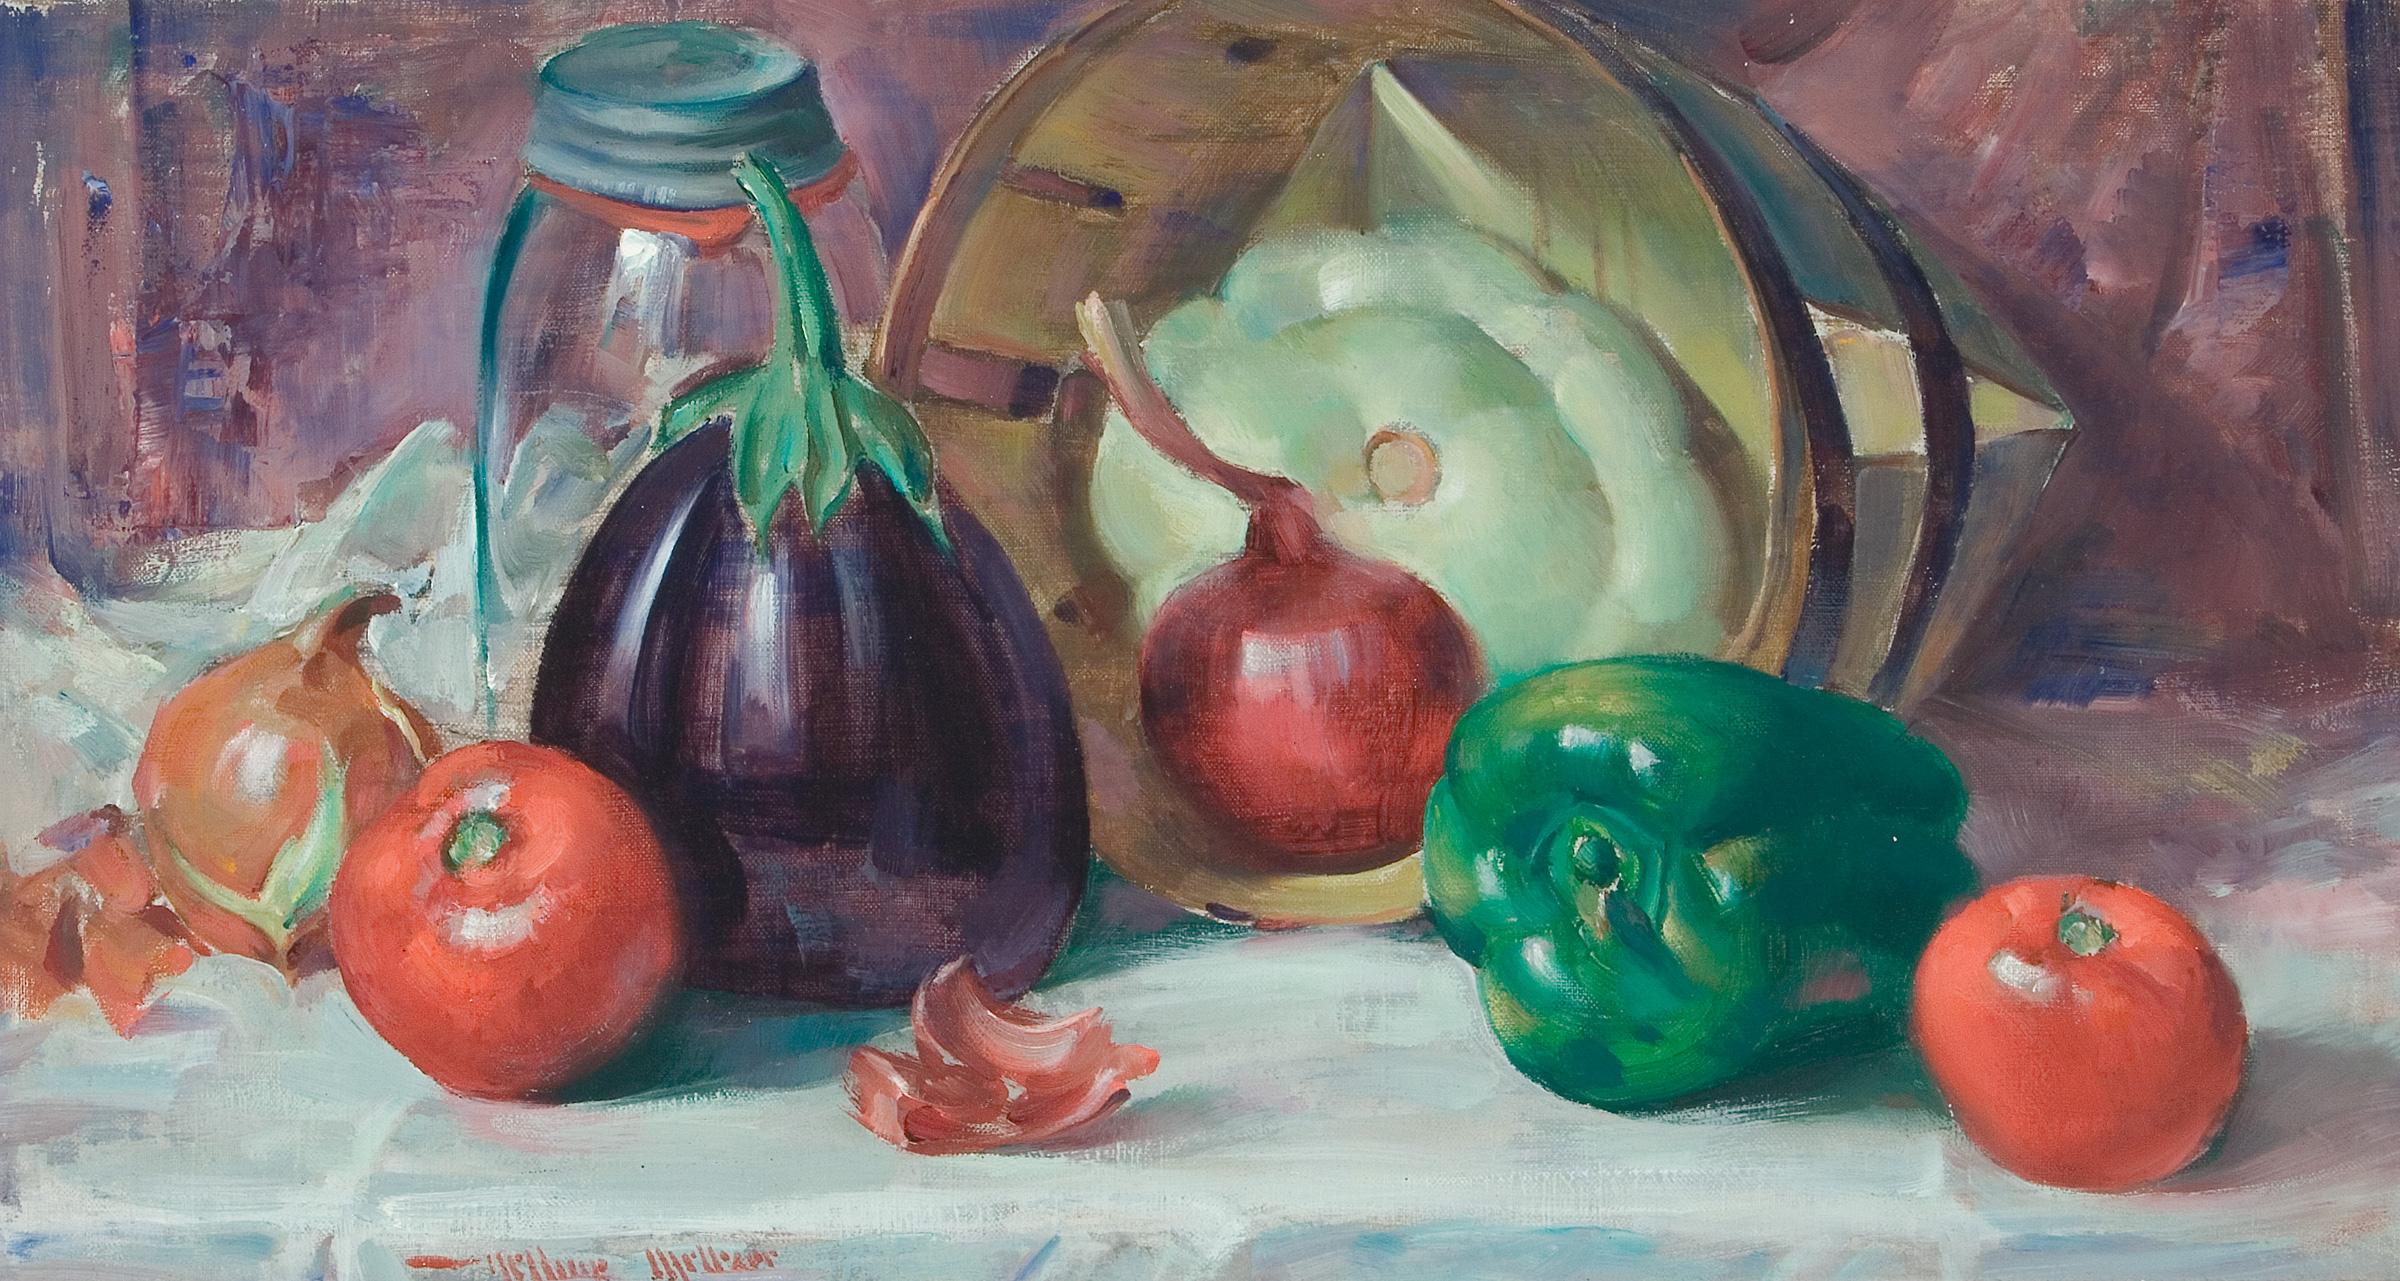 Green Pepper - Late Modernist Still Life - Painting by Arthur Meltzer